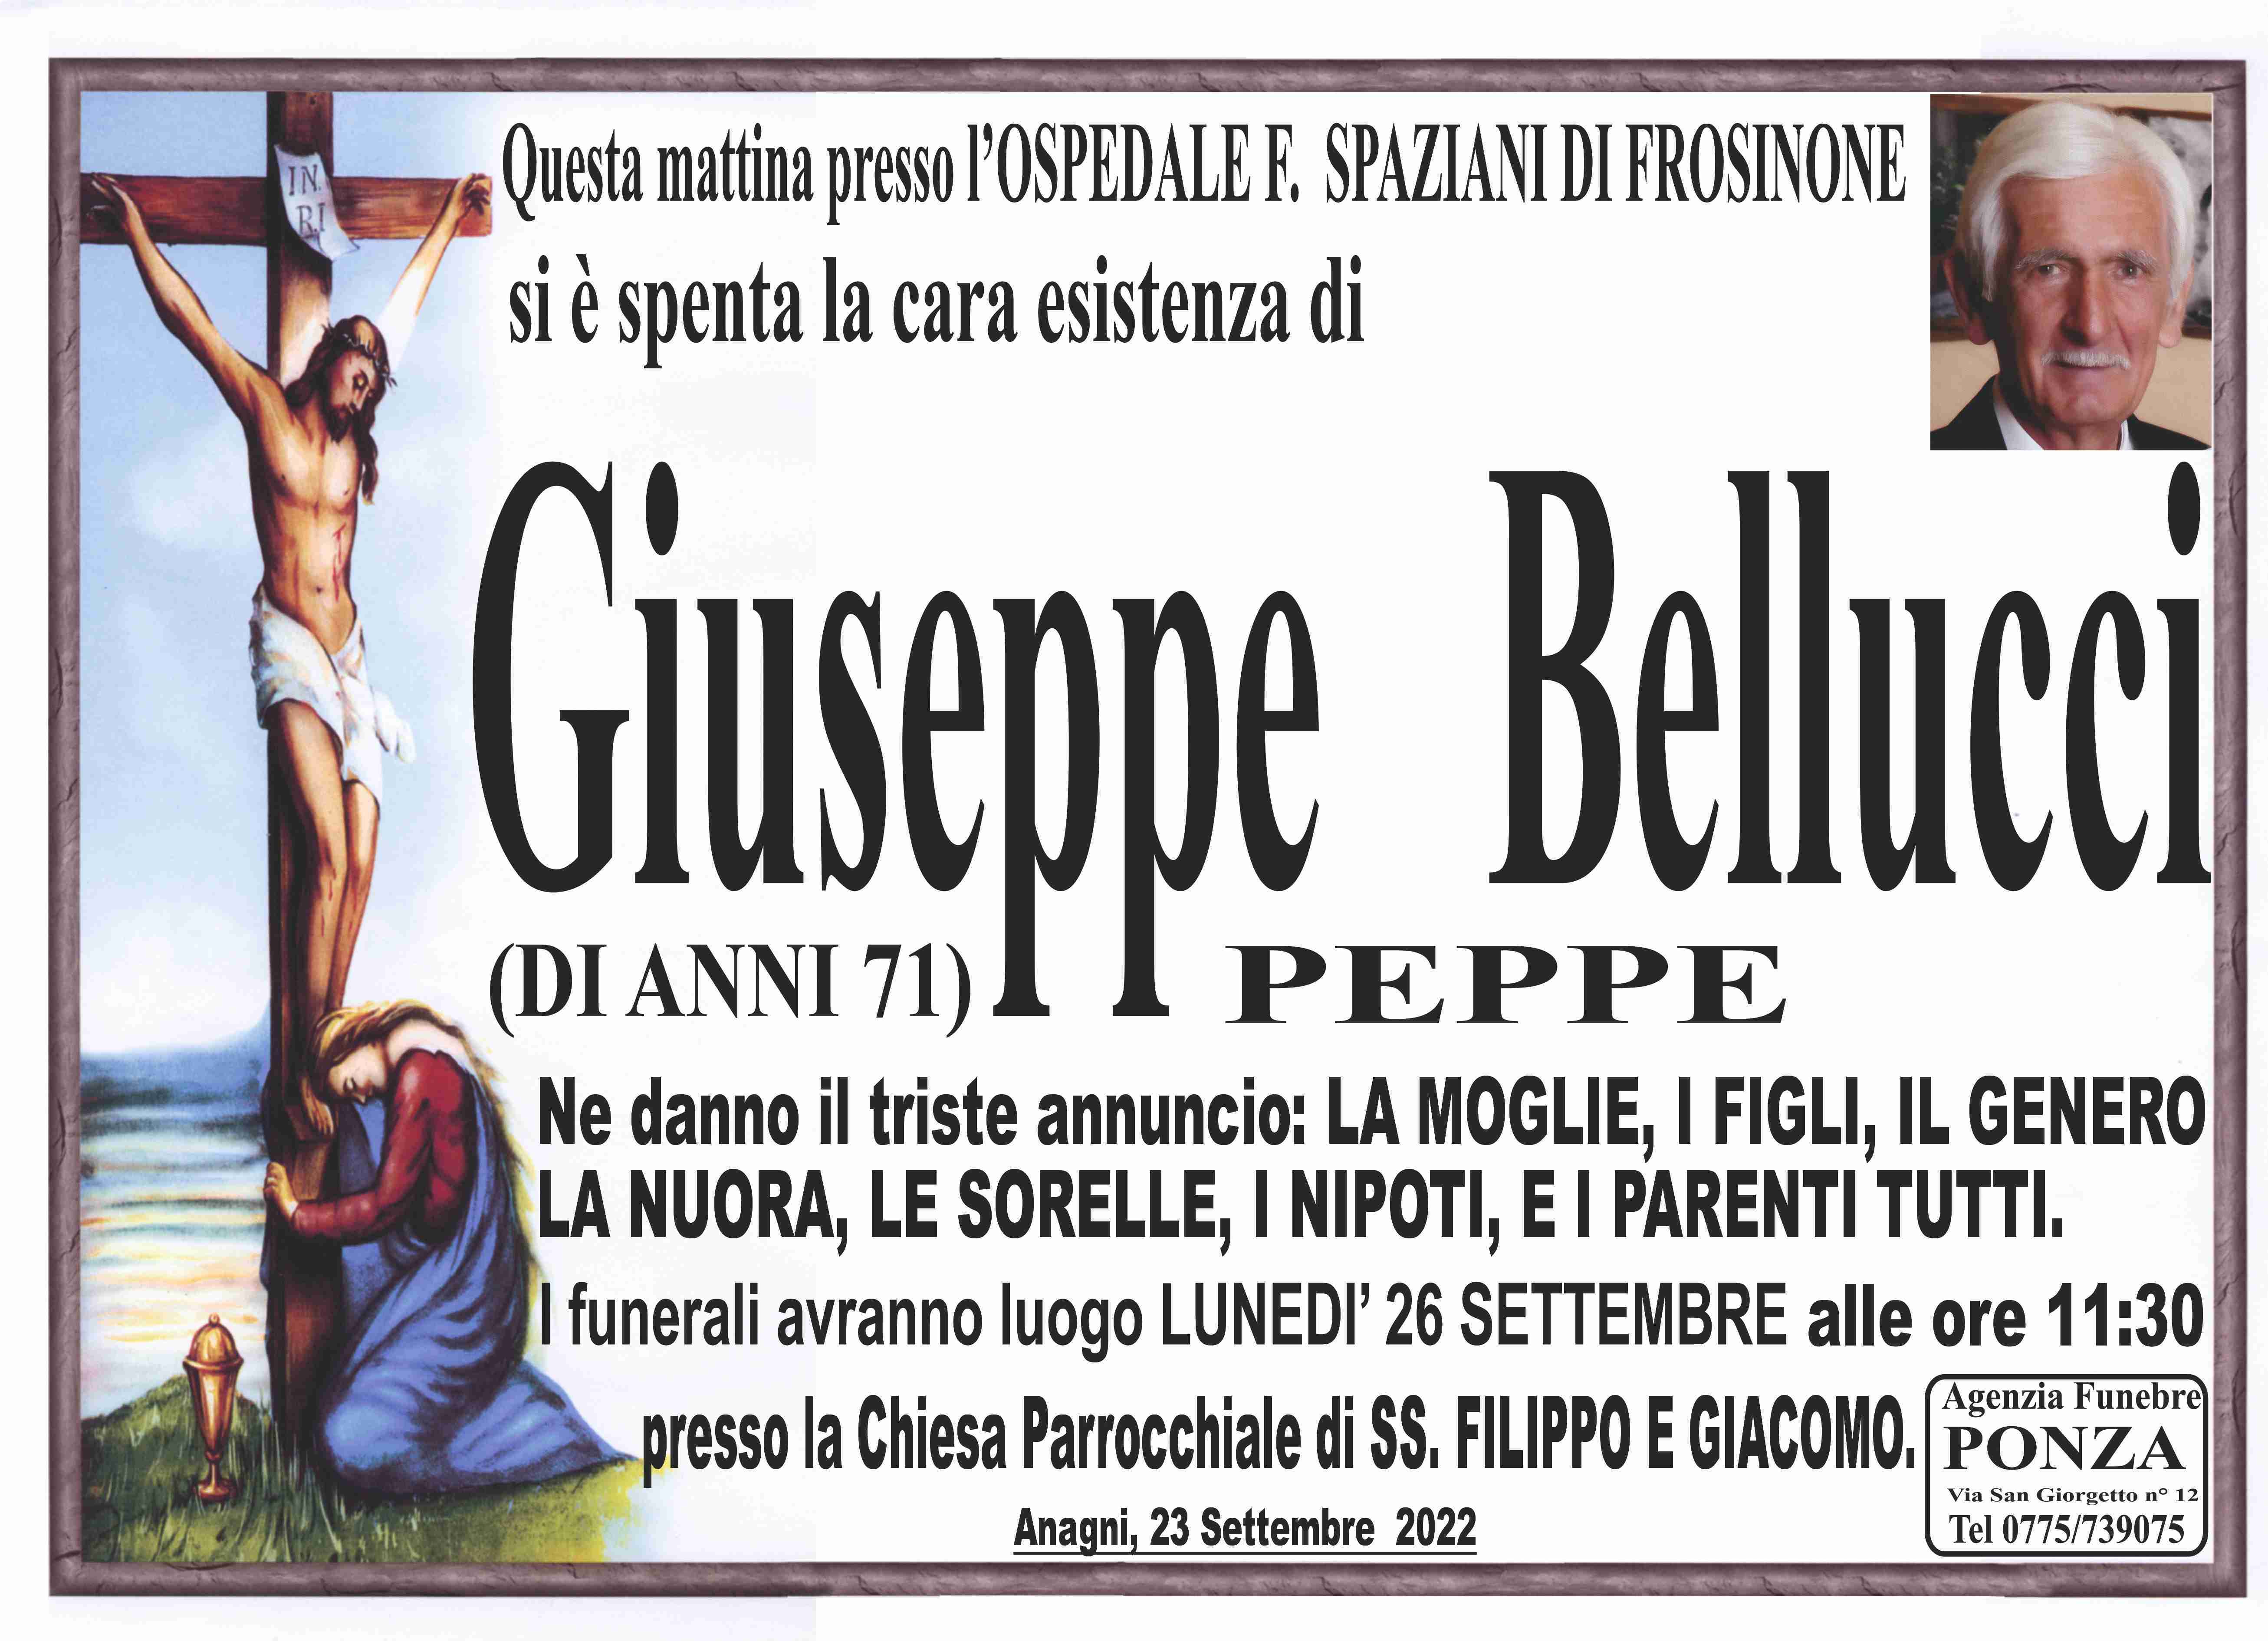 Giuseppe Bellucci